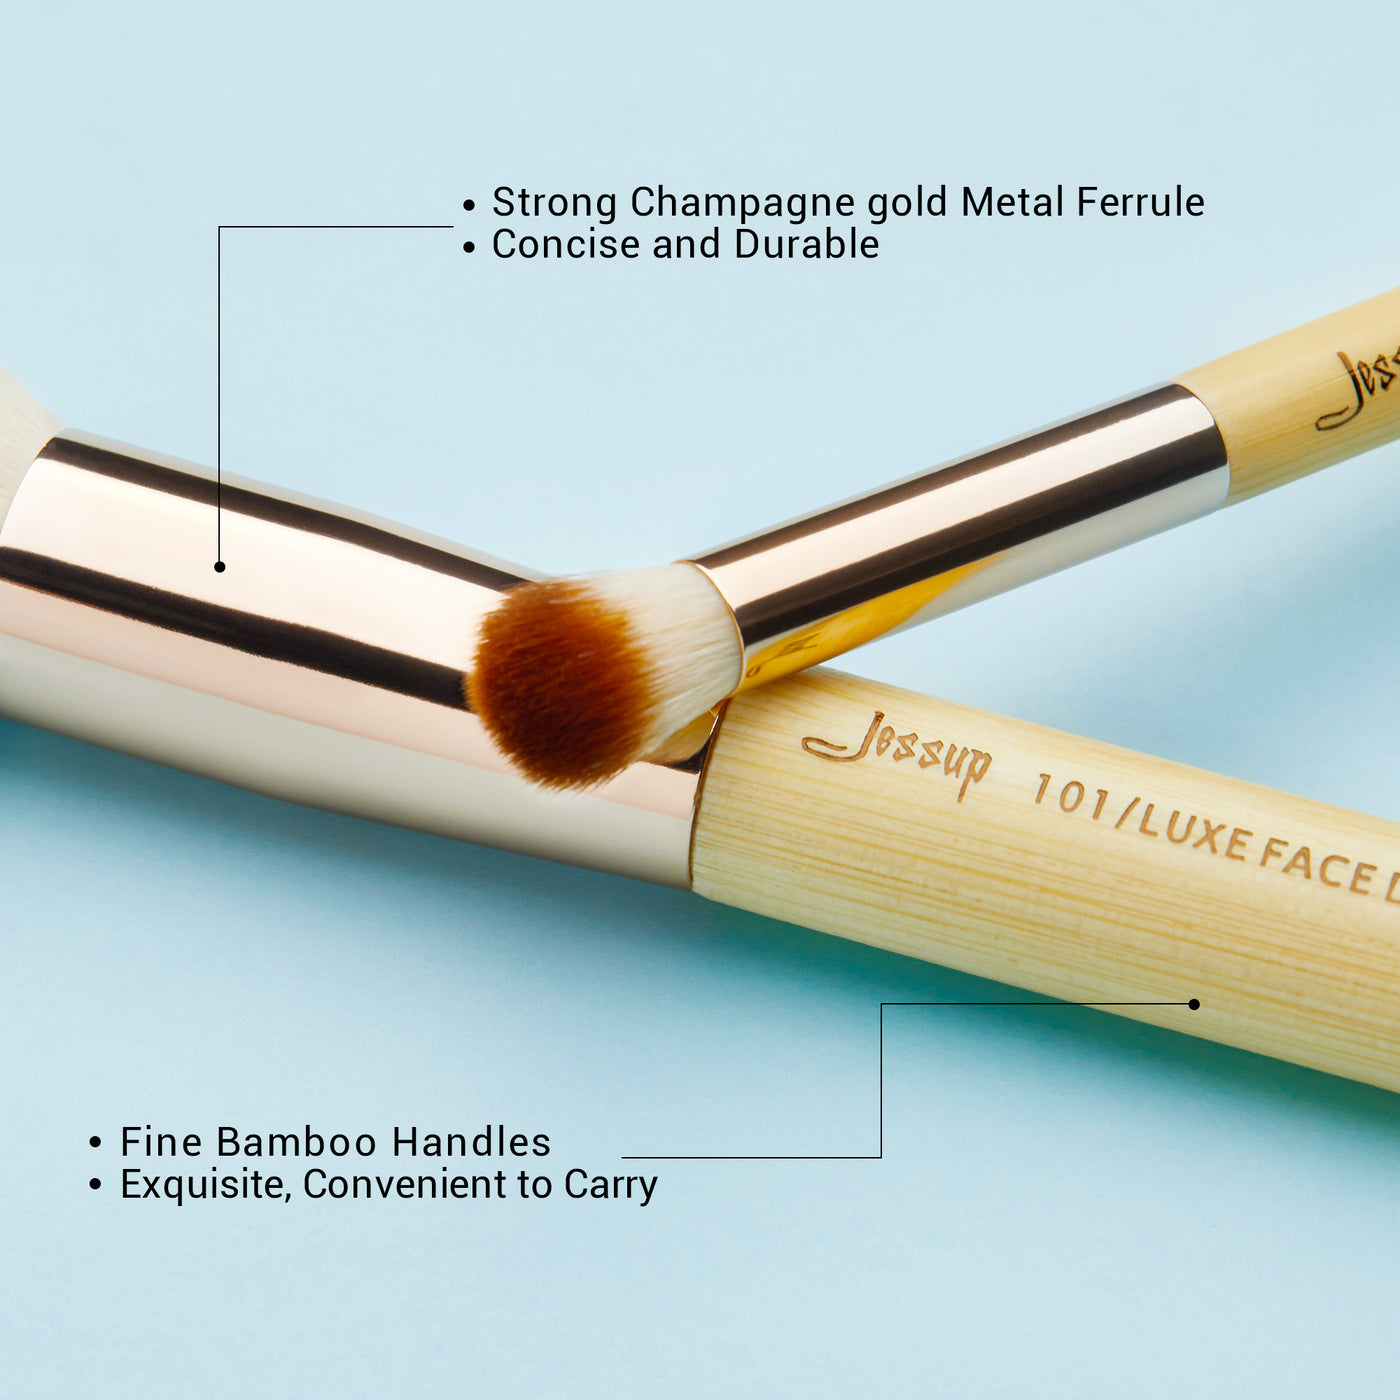 bamboo makeup brushes set professional 15pcs - Jessup Beauty